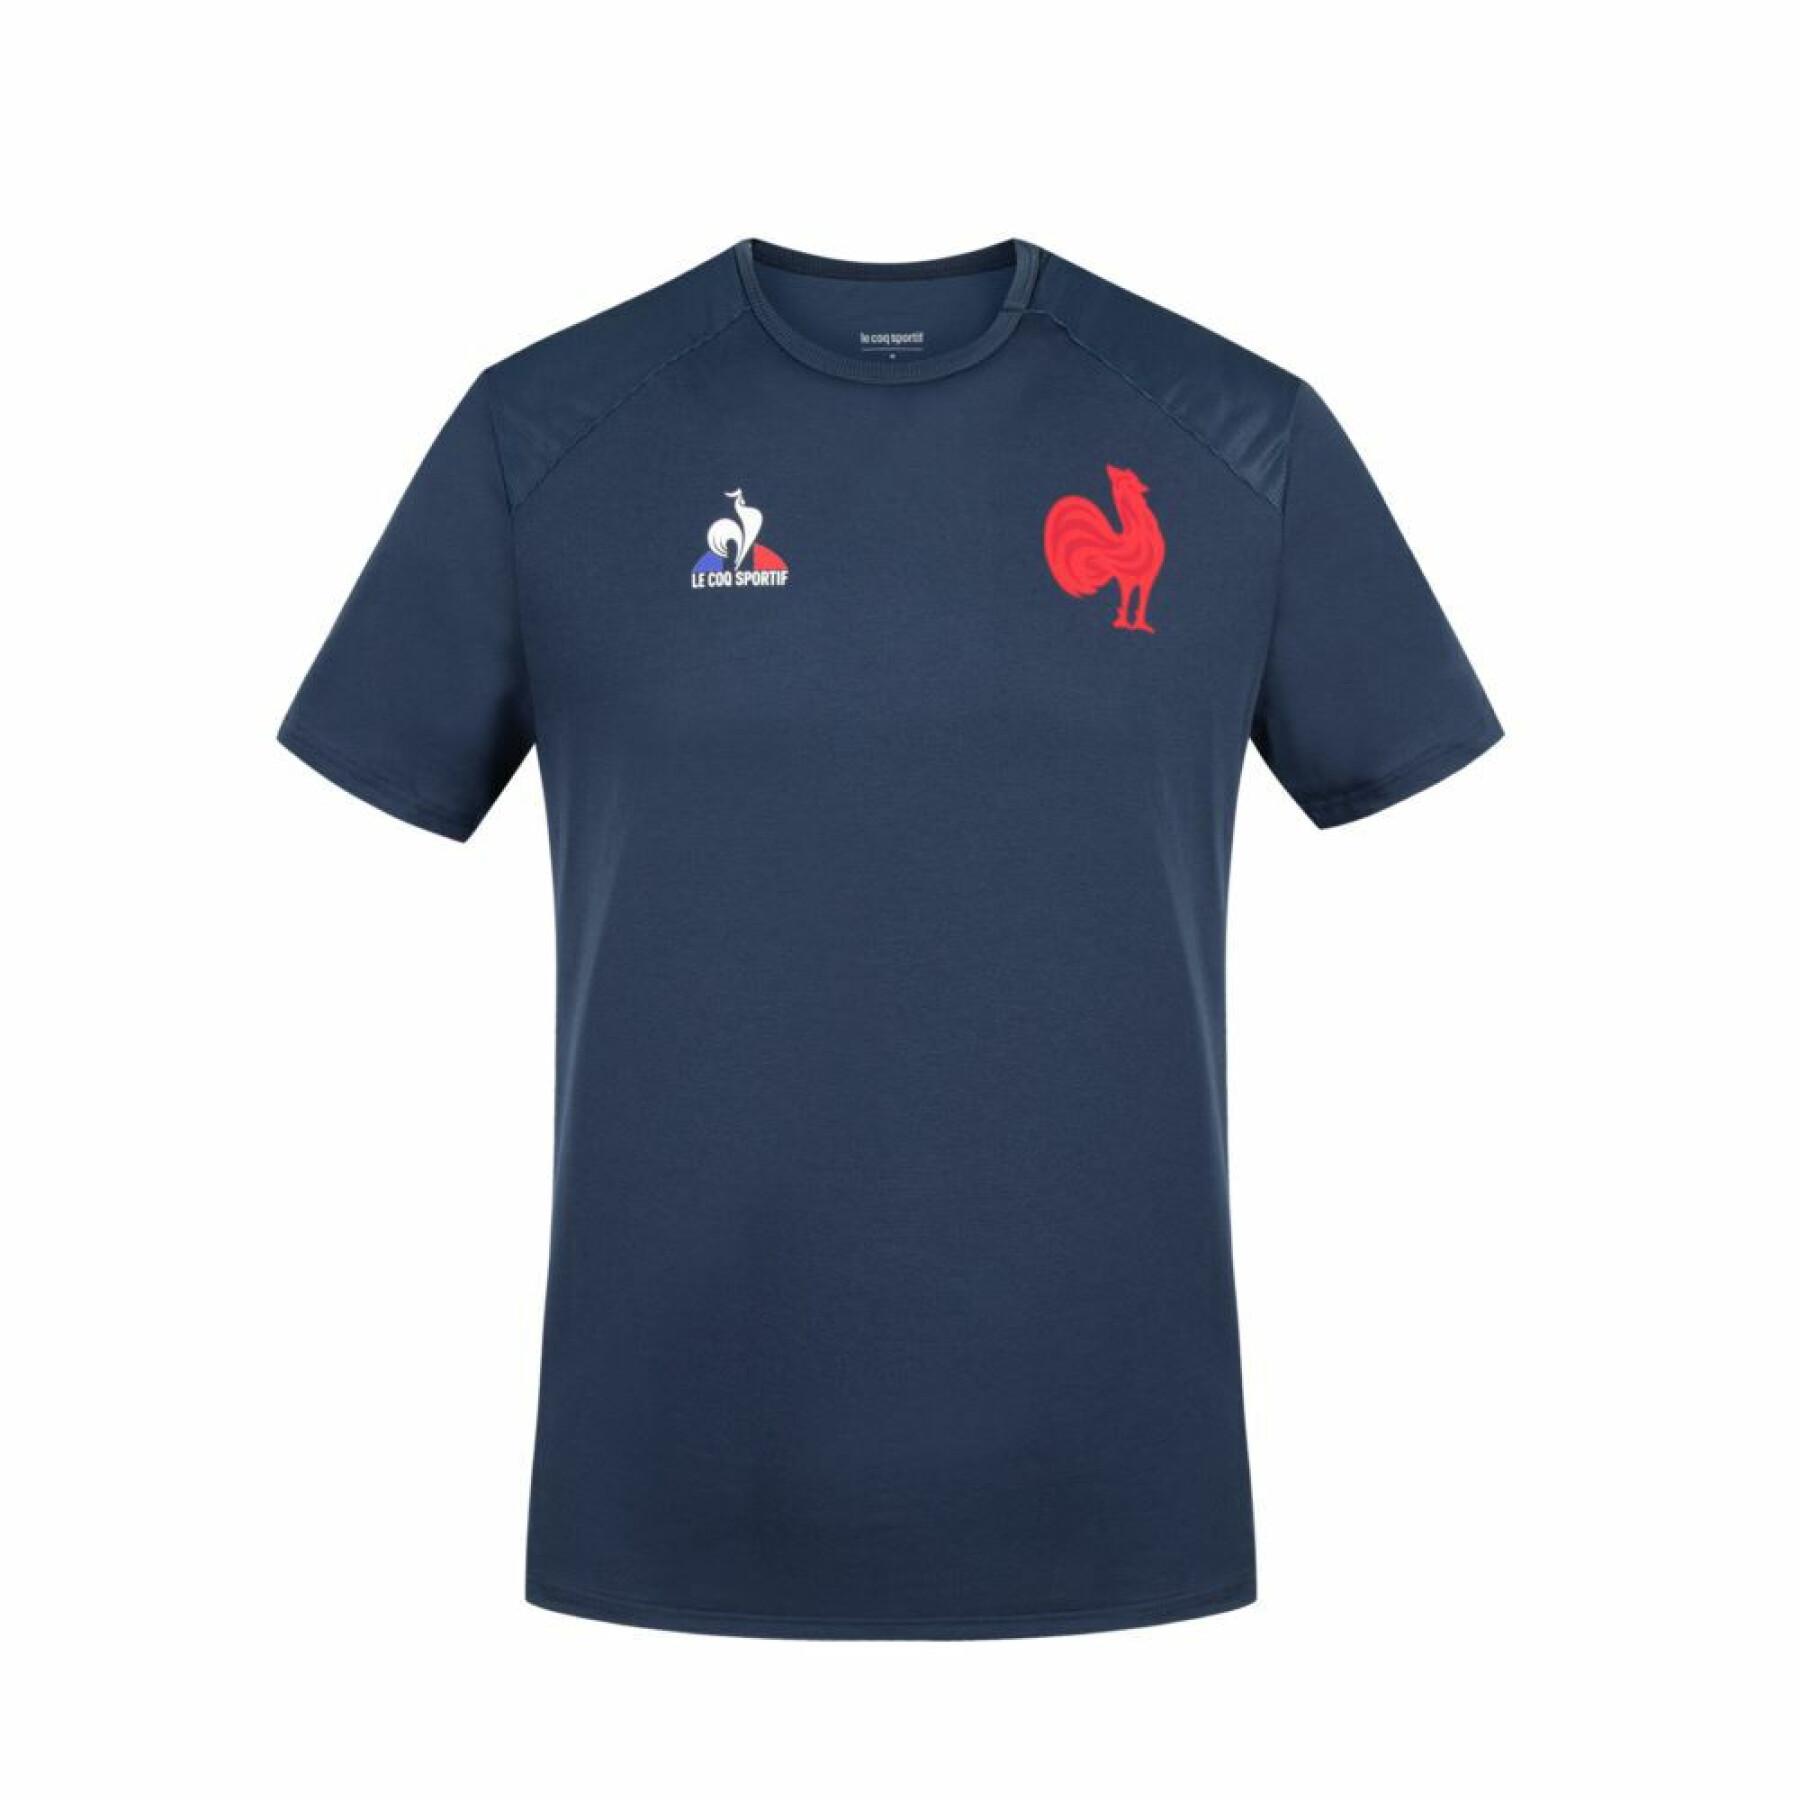 xv training shirt from France 2021/22